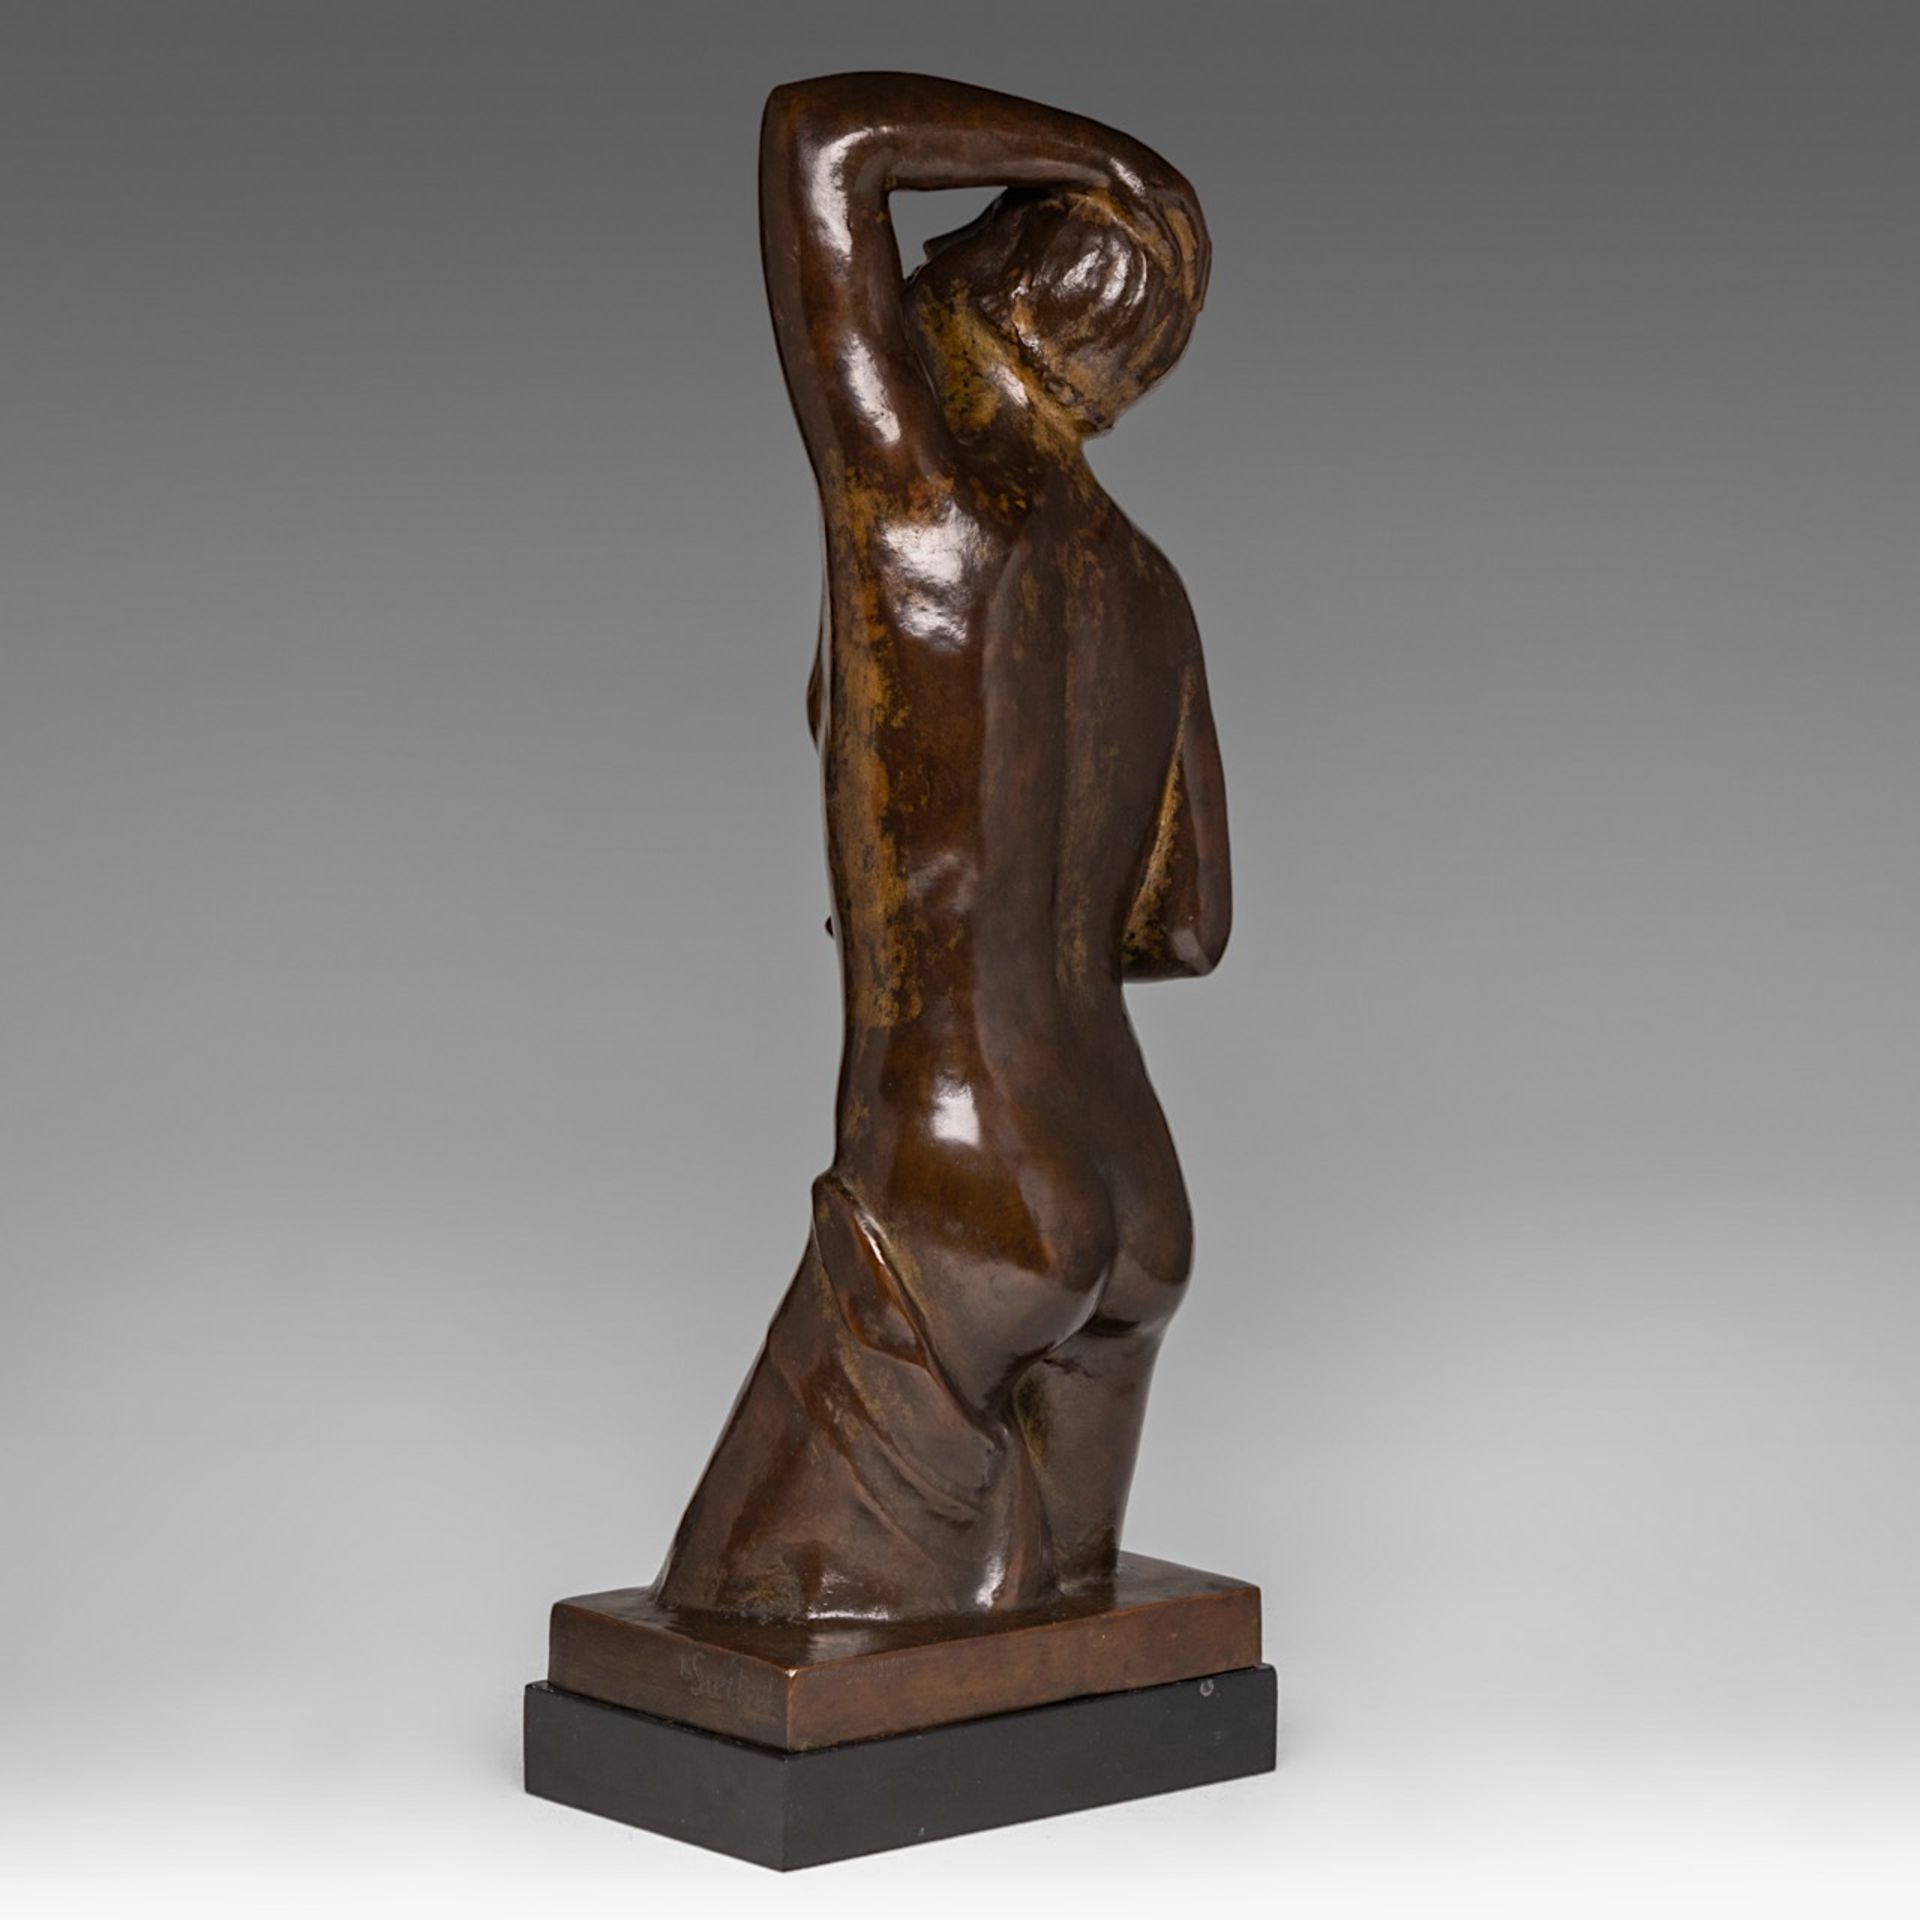 Leon Sarteel (1882-1942), Baigneuse, patinated bronze, casted by G. Vindevogel, Zwijnaarde, H 58 cm - Bild 3 aus 7